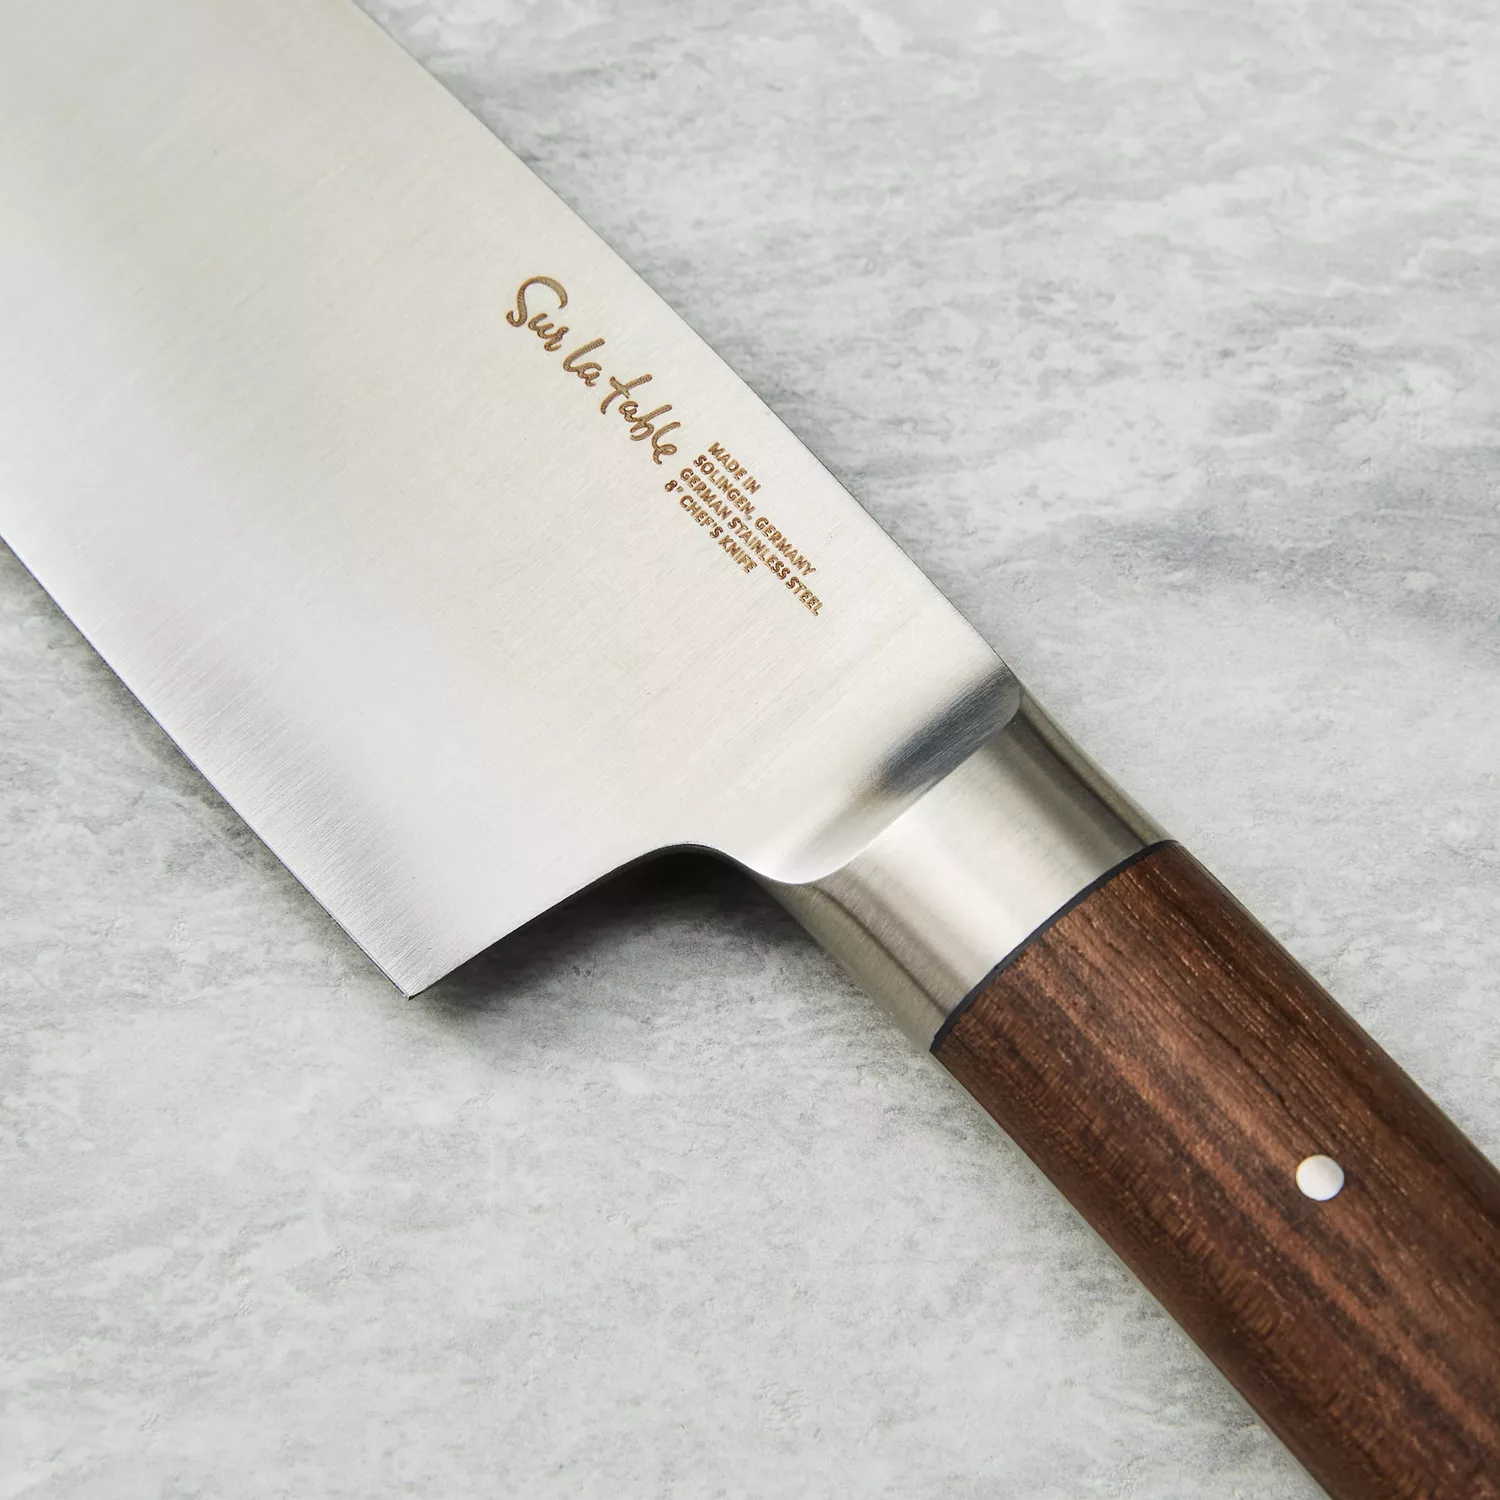  Viking Culinary German Steel Hollow Handle Knife Set